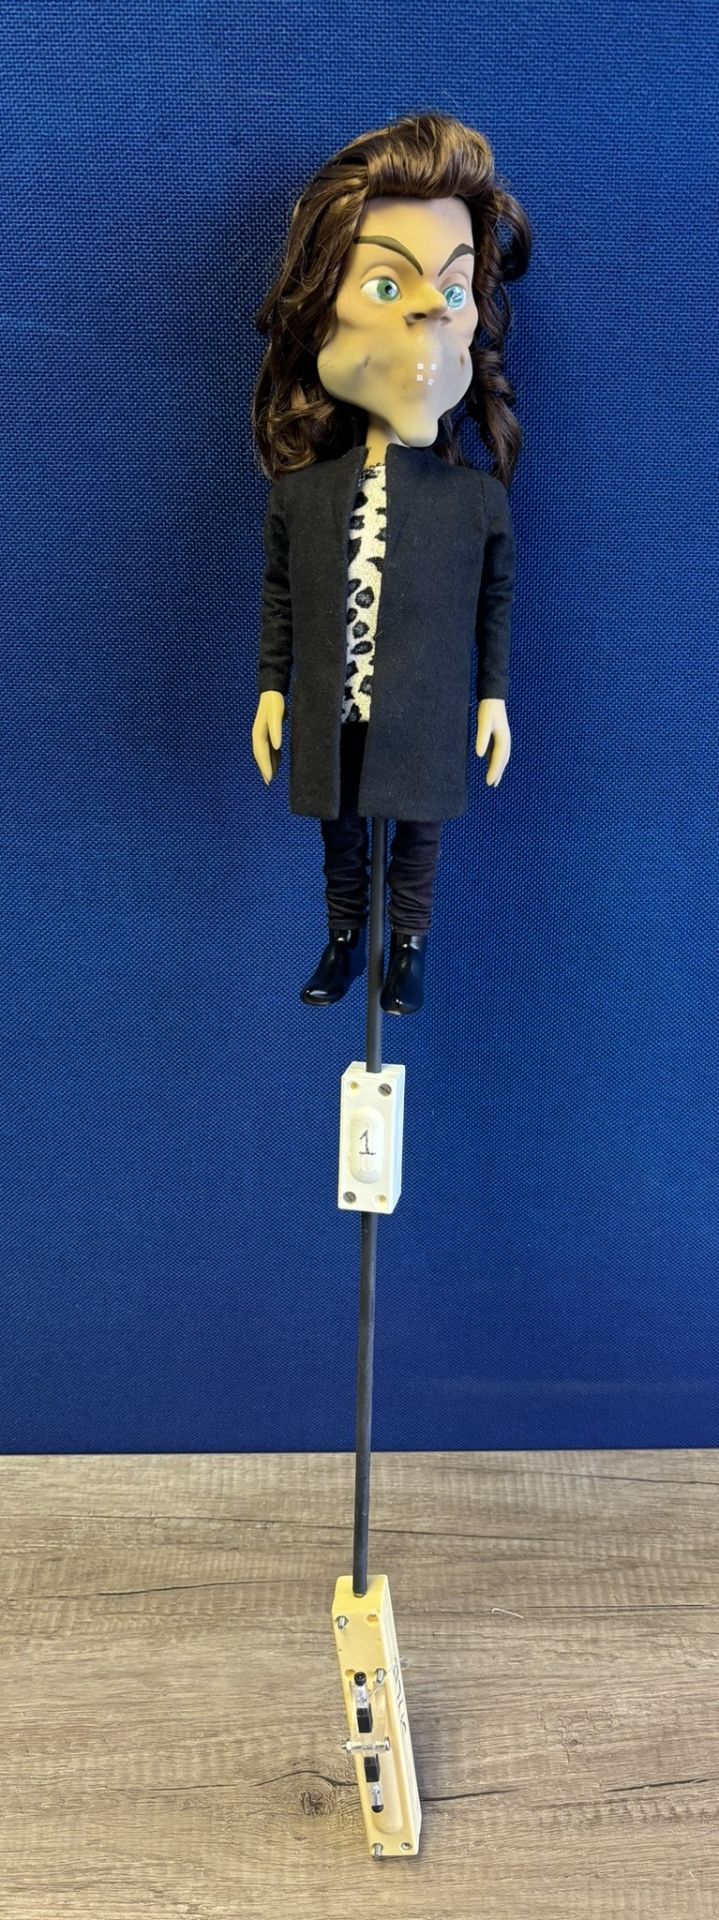 Newzoid puppet - Harry Styles - Image 2 of 2